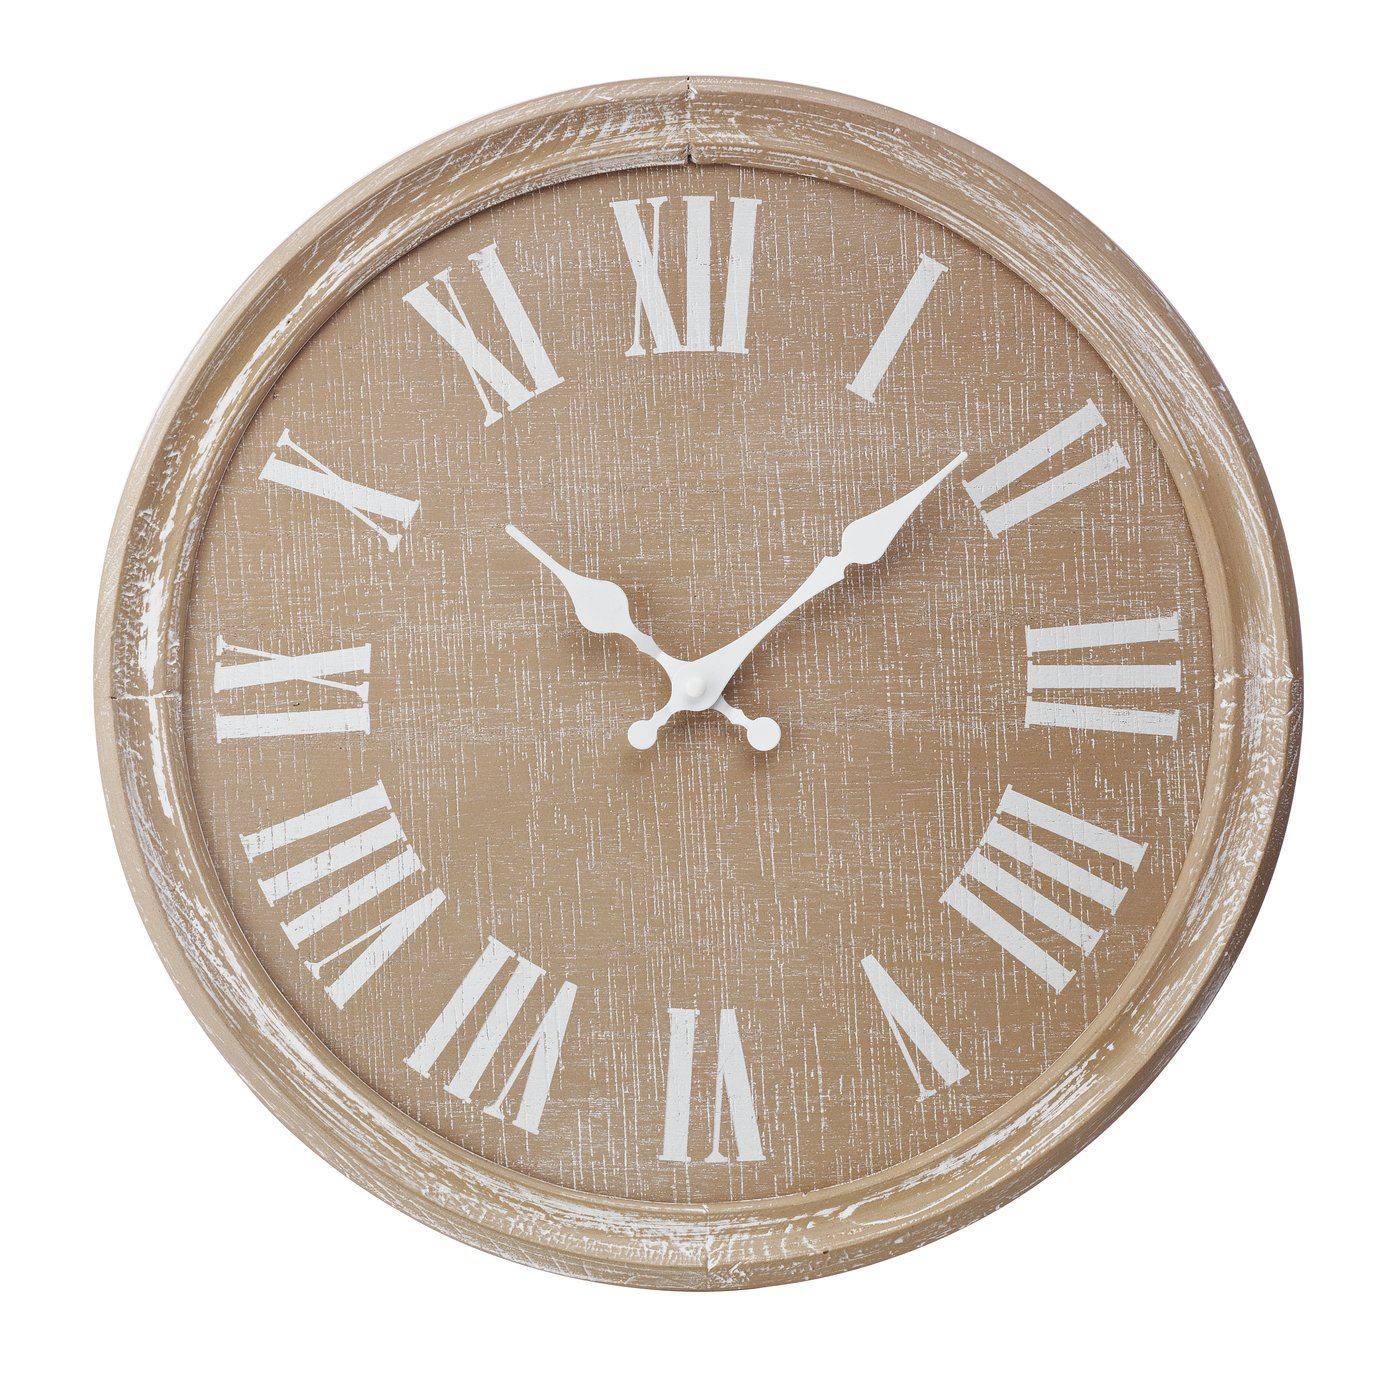 Argos Home Wooden Clock Review